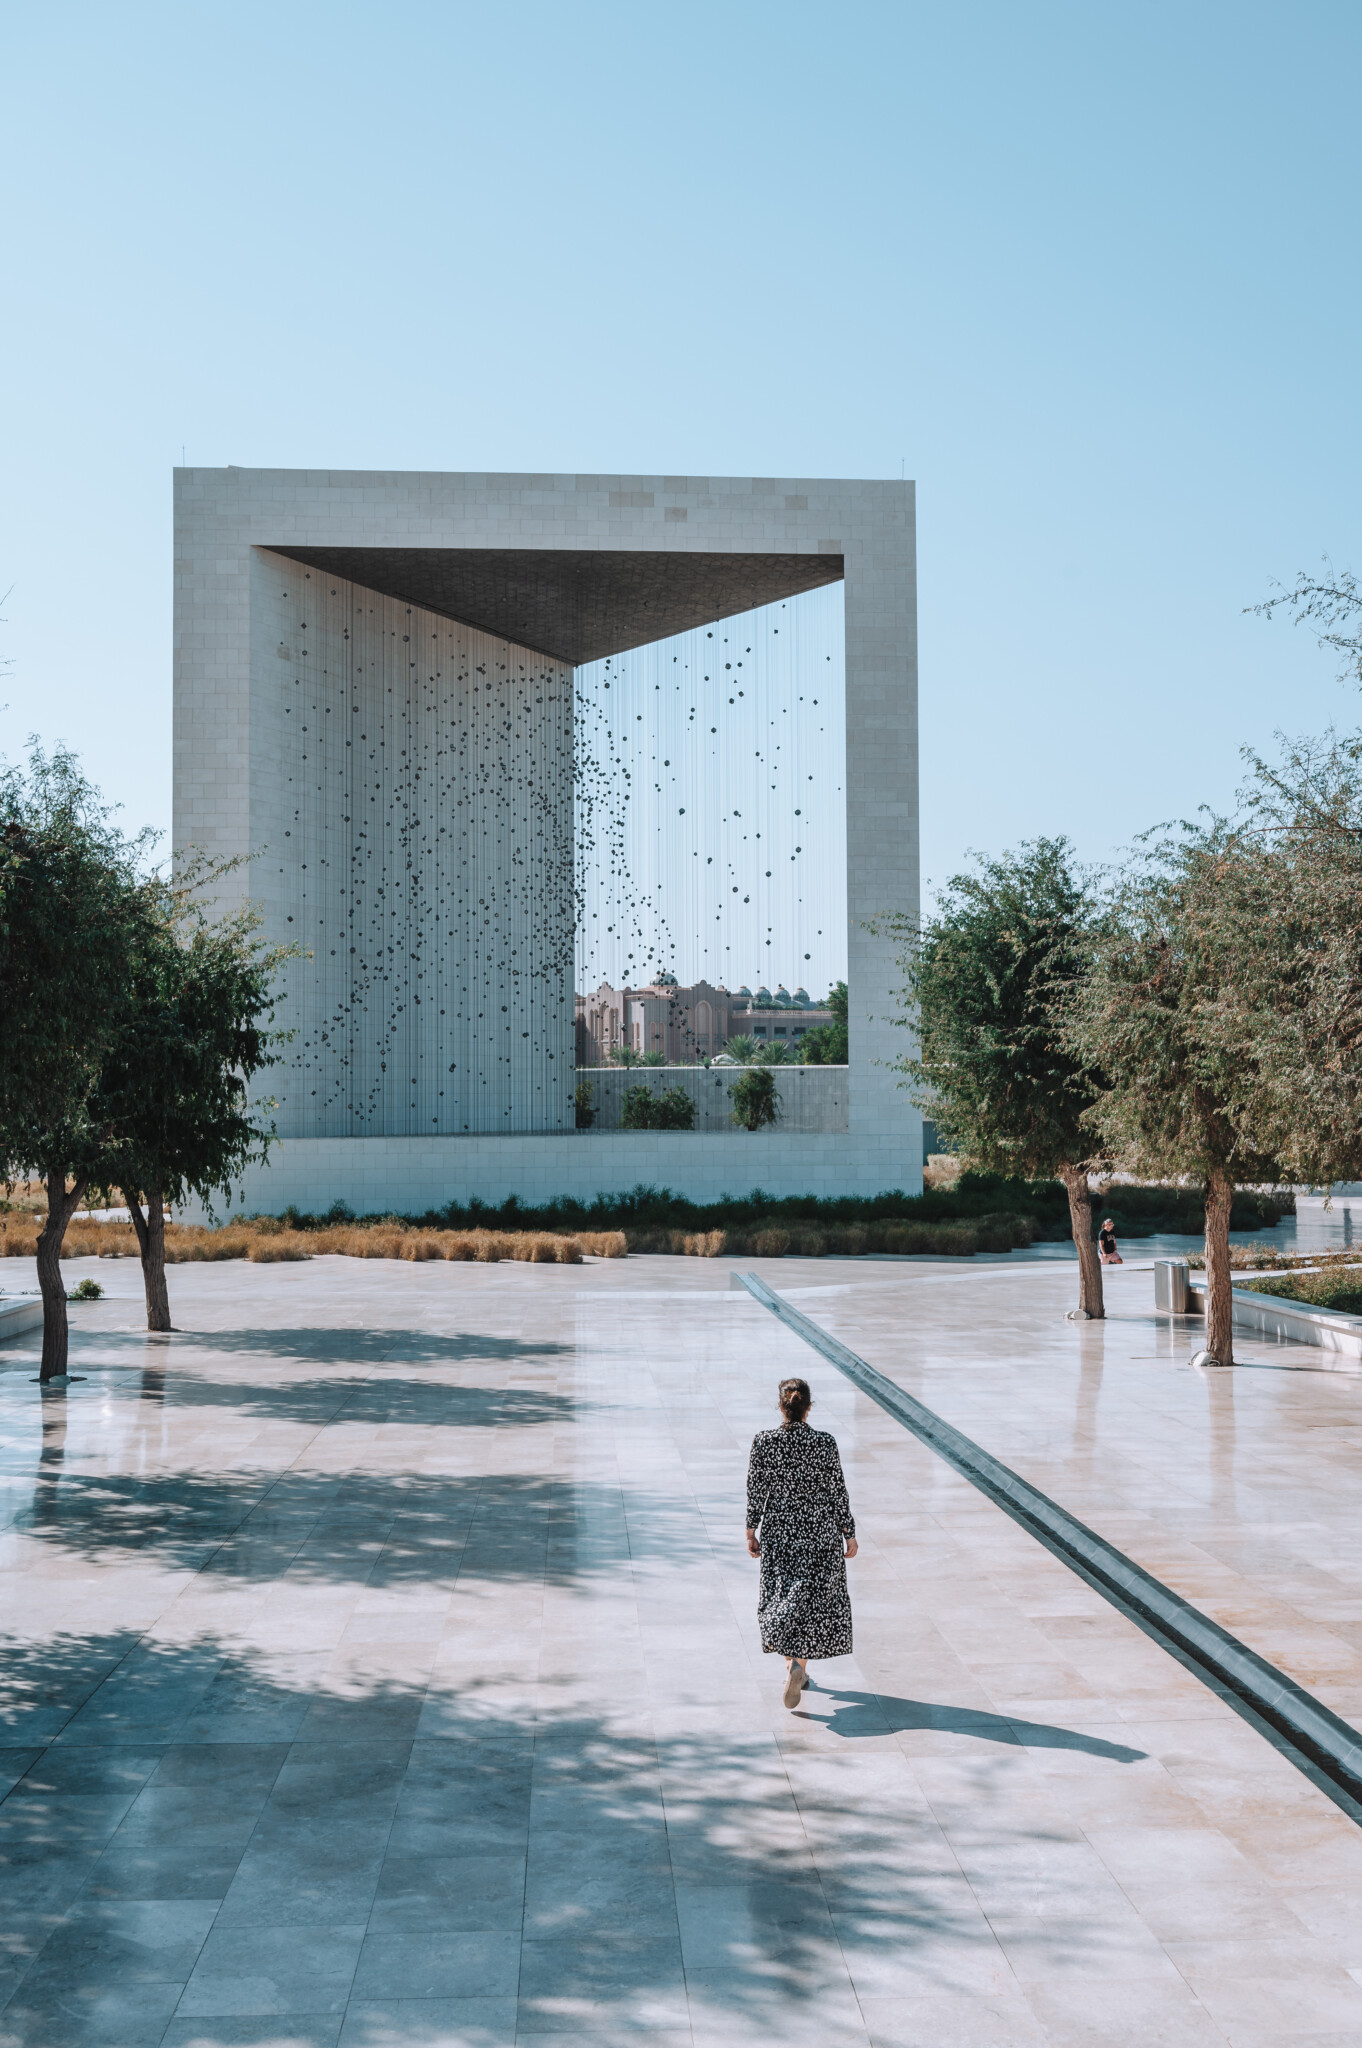 Founder's Memorial in Abu Dhabi